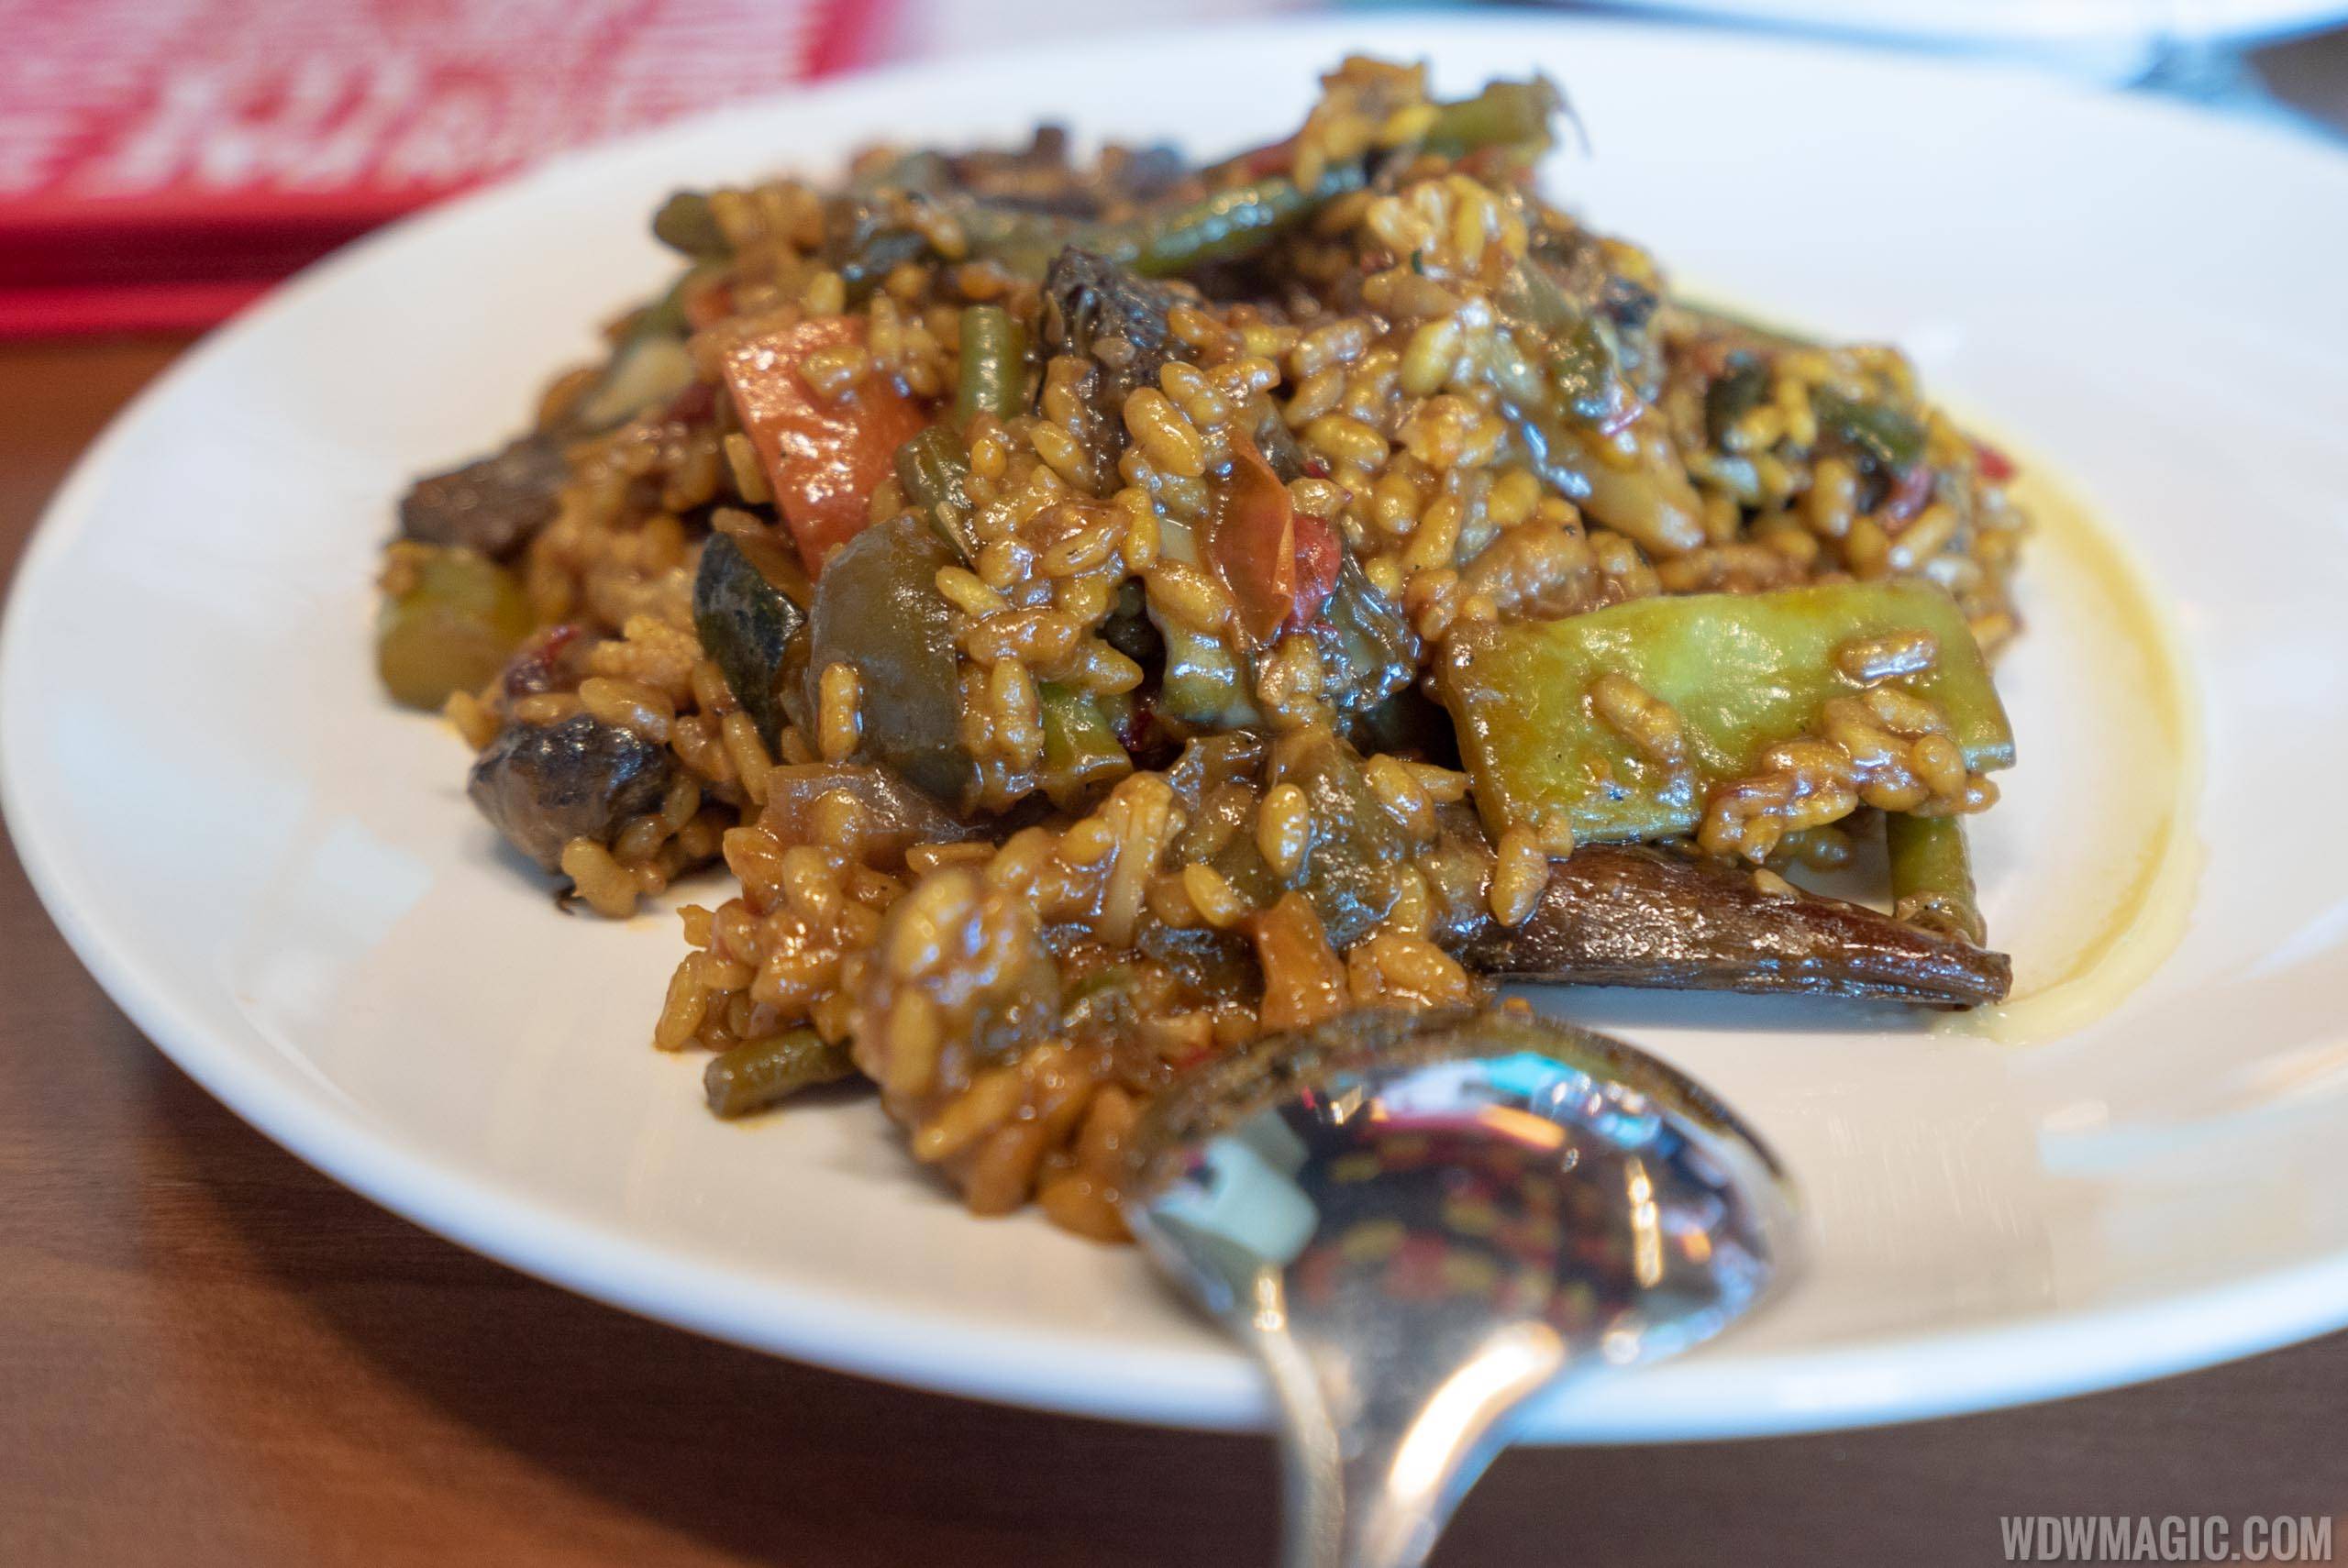 Chef's tasting menu: José's Way - A traditional paella of seasonal vegetables and mushrooms